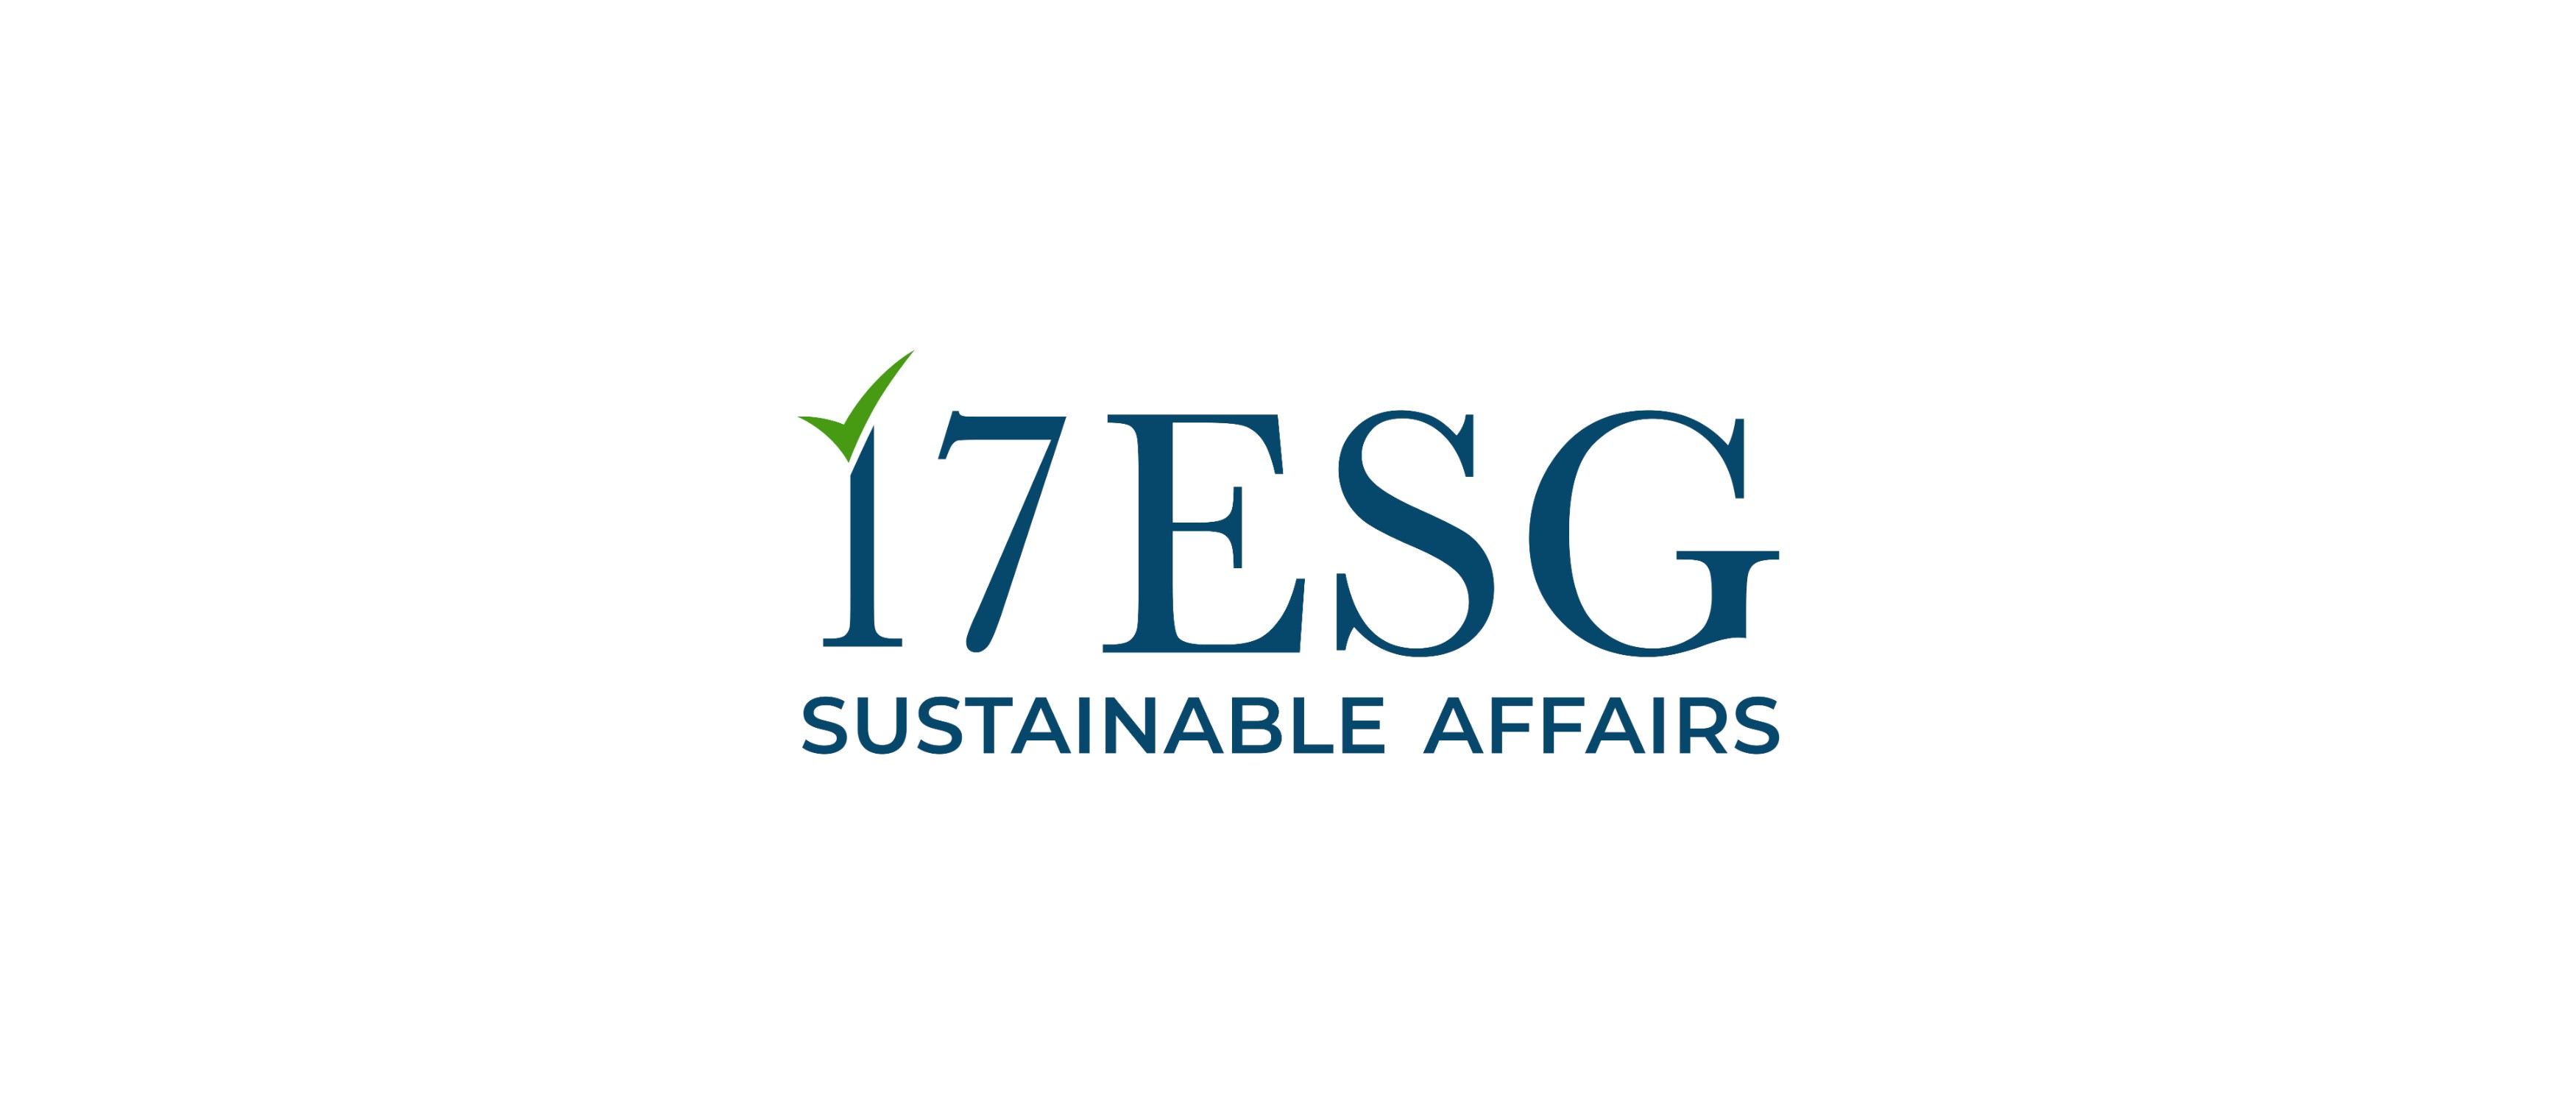 17 ESG Sustainable Affairs